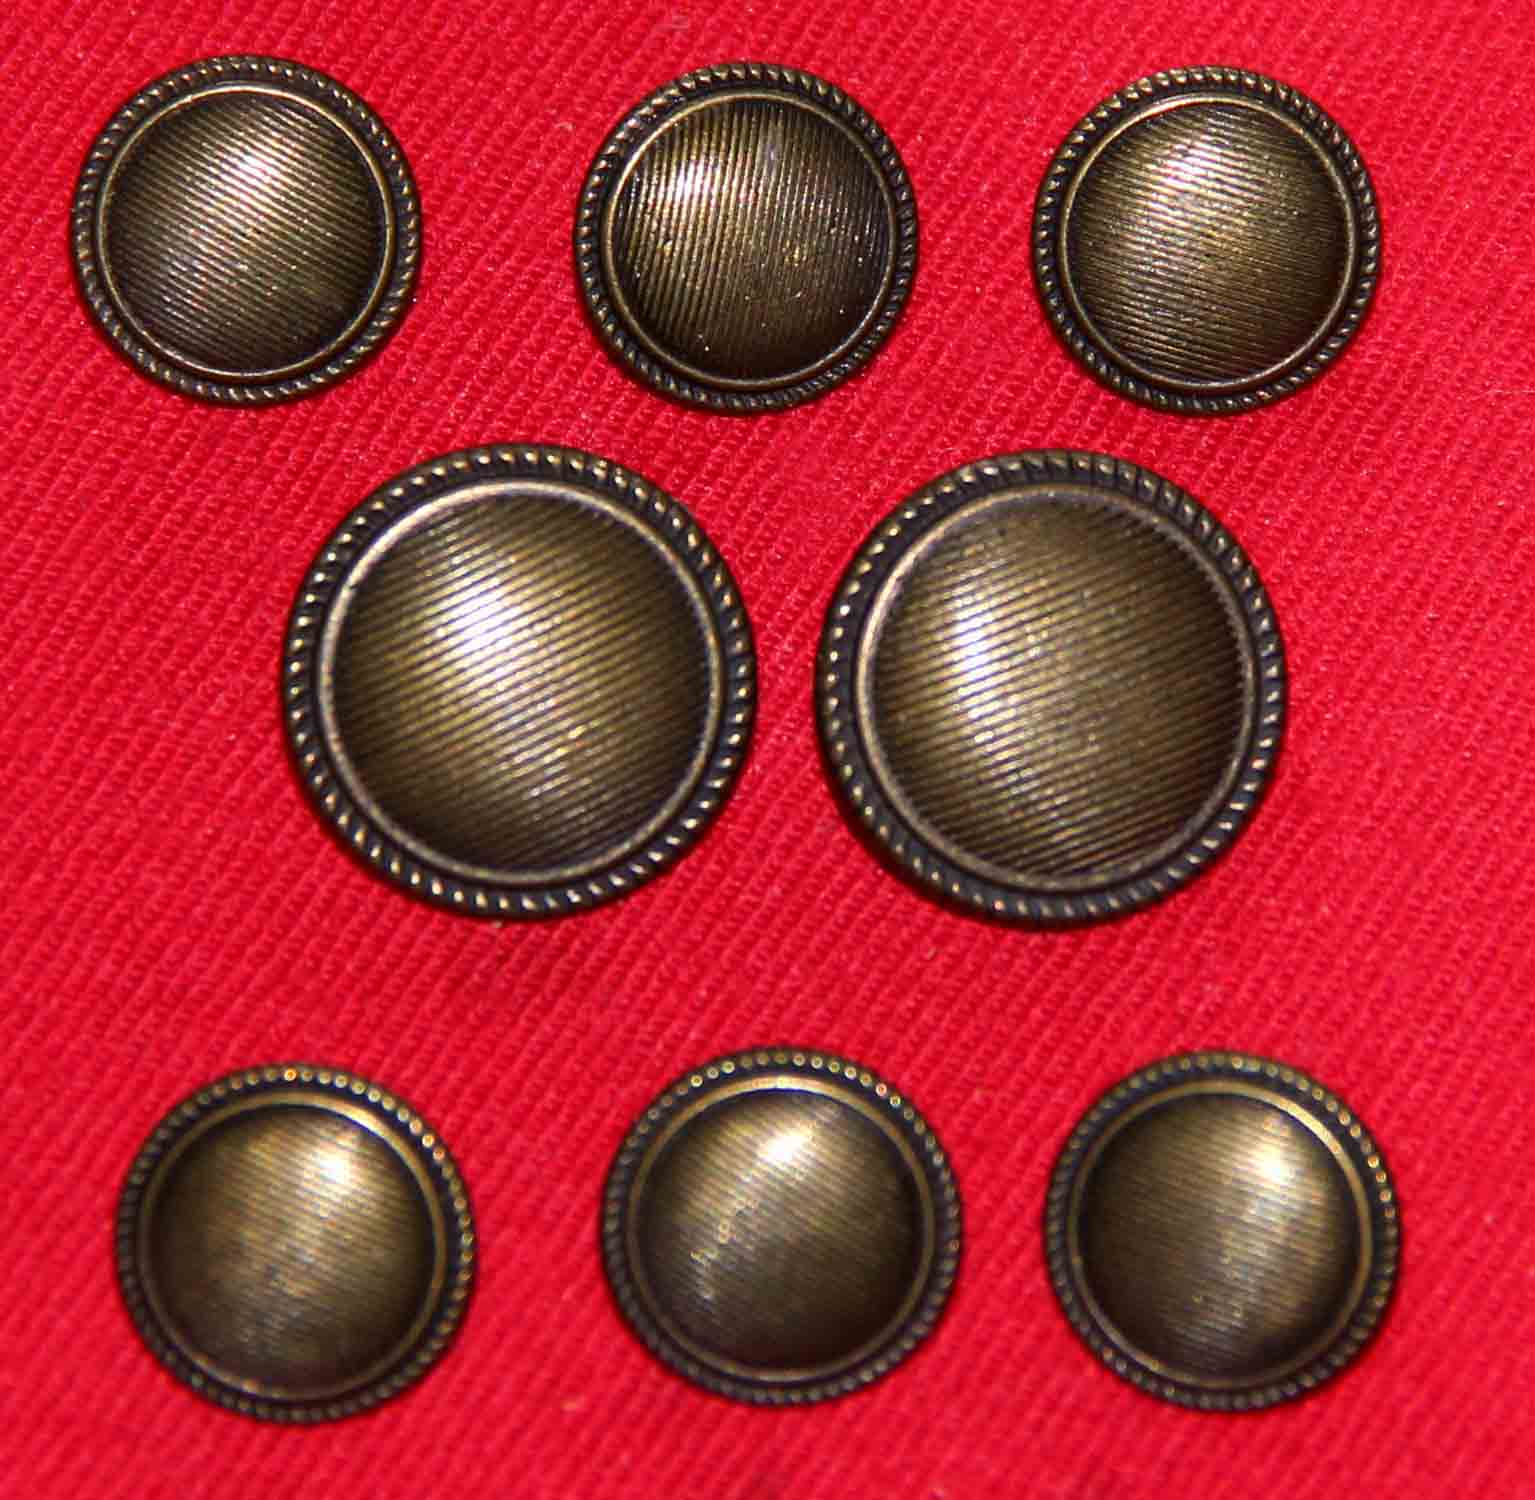 Vintage Club Room Blazer Buttons Set Antique Gold Brass Shank Men's